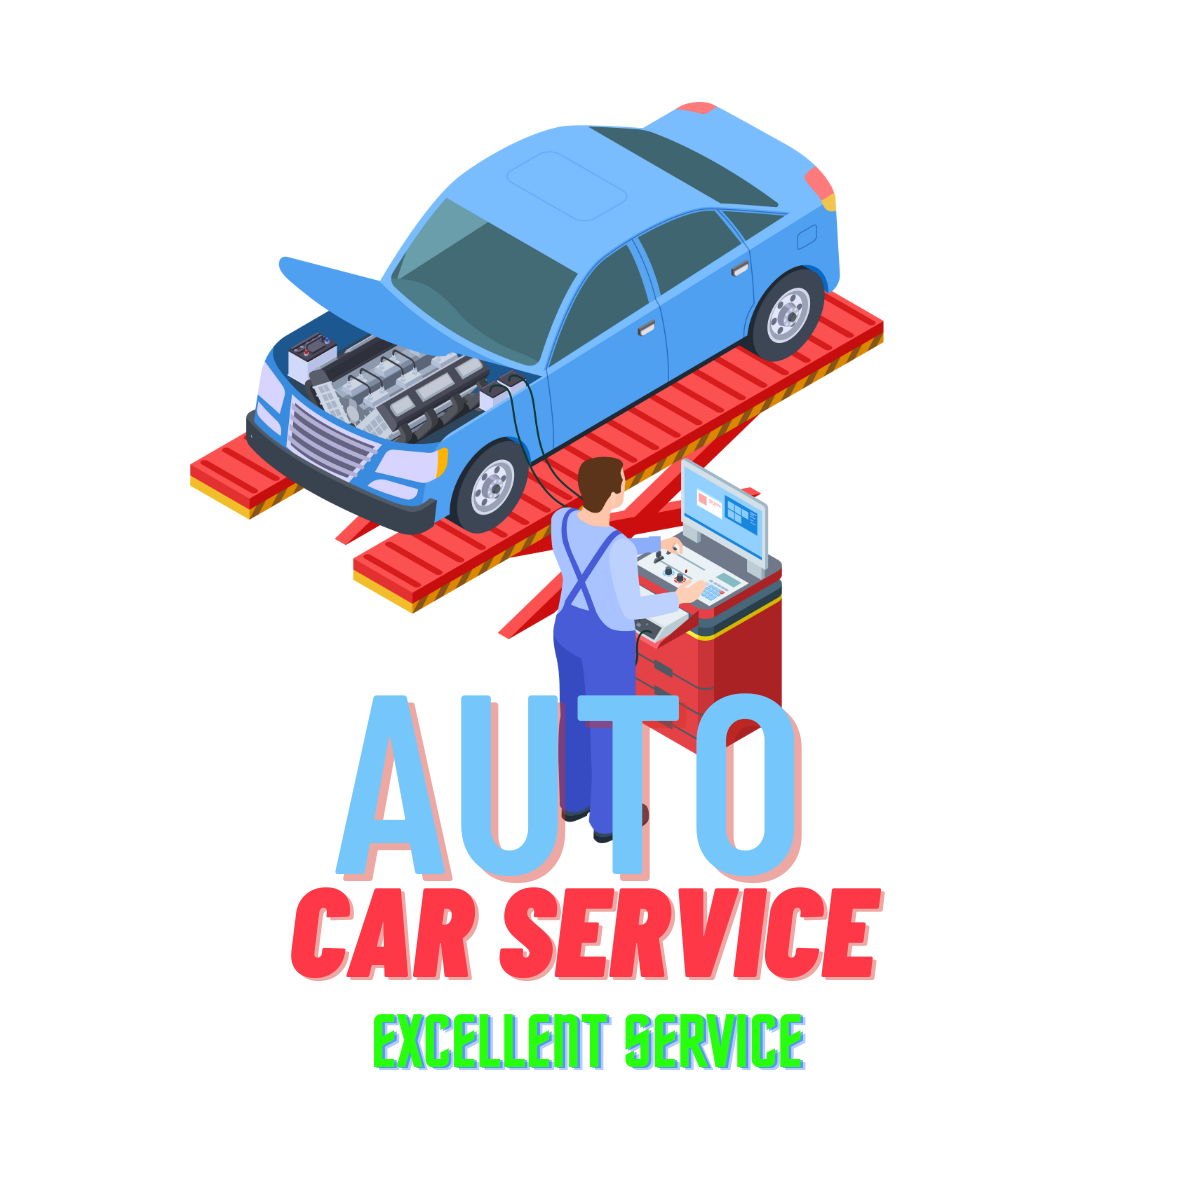 car service logo cover image.